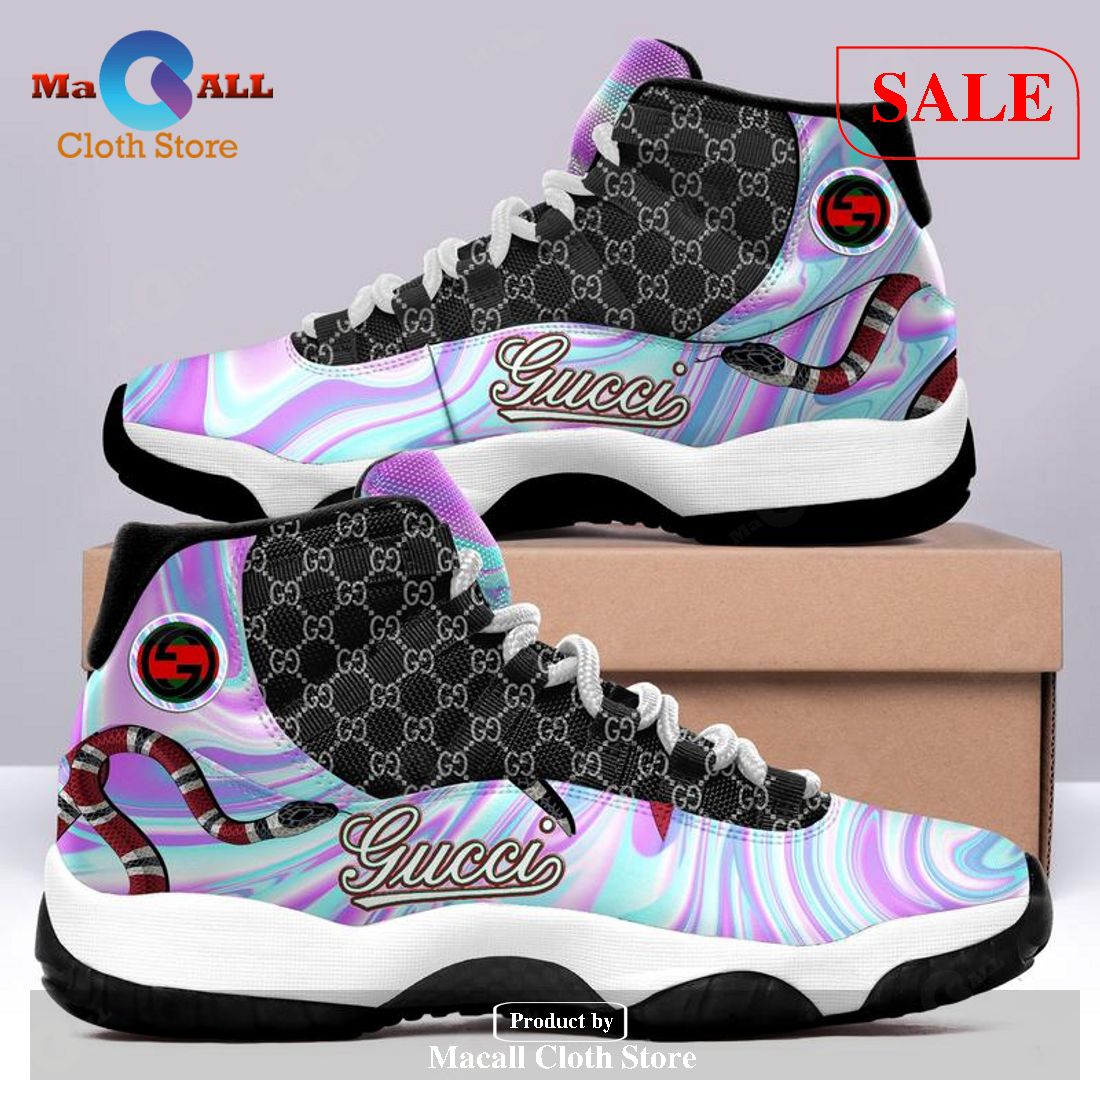 SALE] Limited Gucci Purple Air Jordan 11 Shoes Hot 2022 Gucci